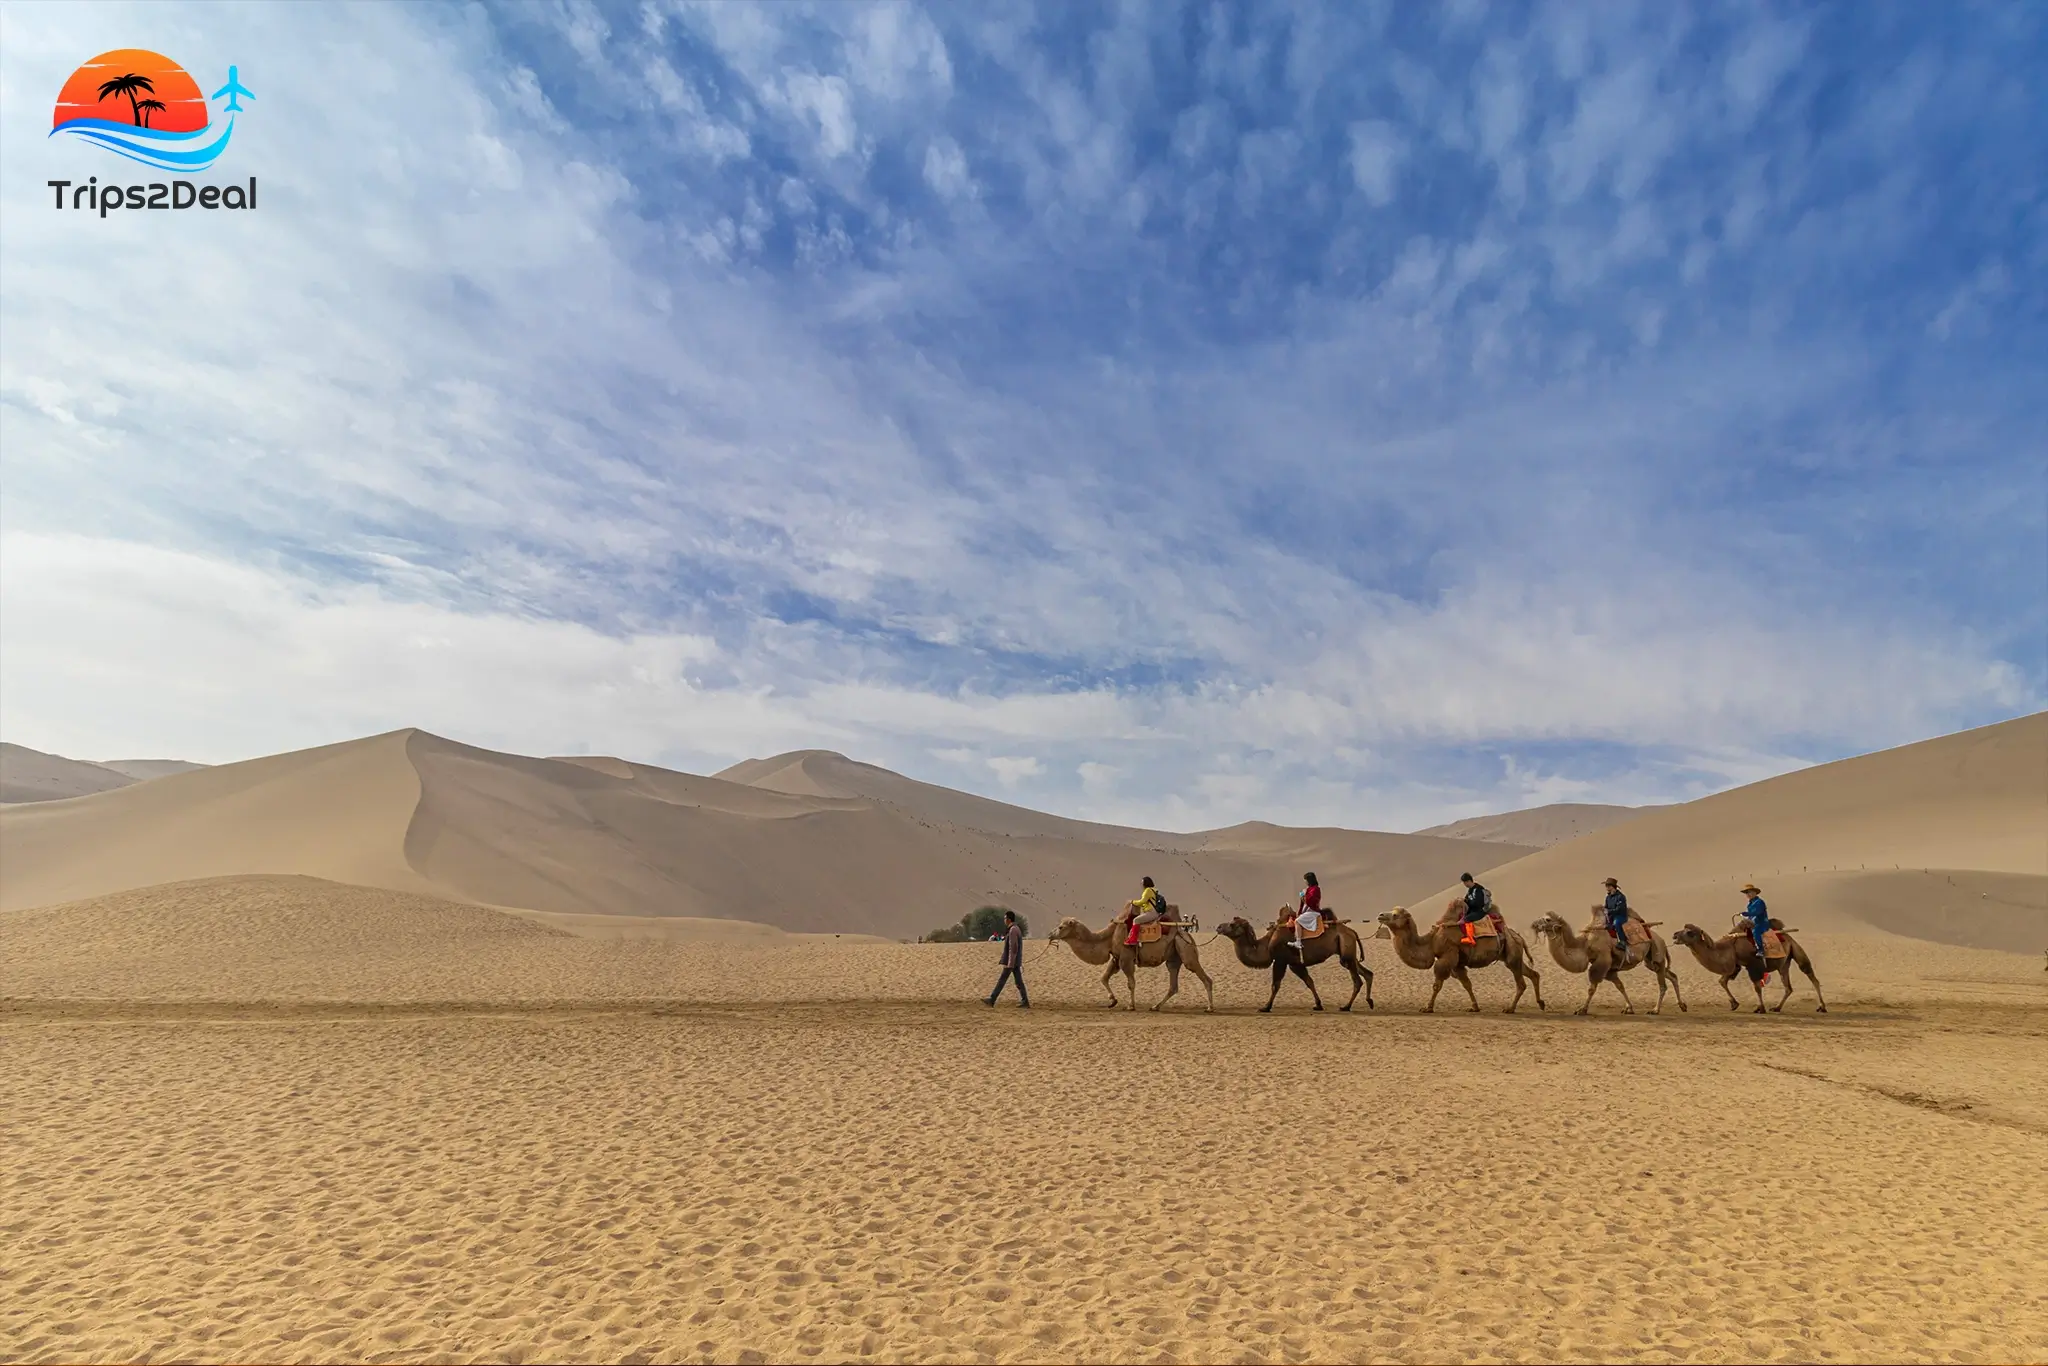 Tour to Bedouin Village, Camel Ride & Dinner From Sharm El Sheikh